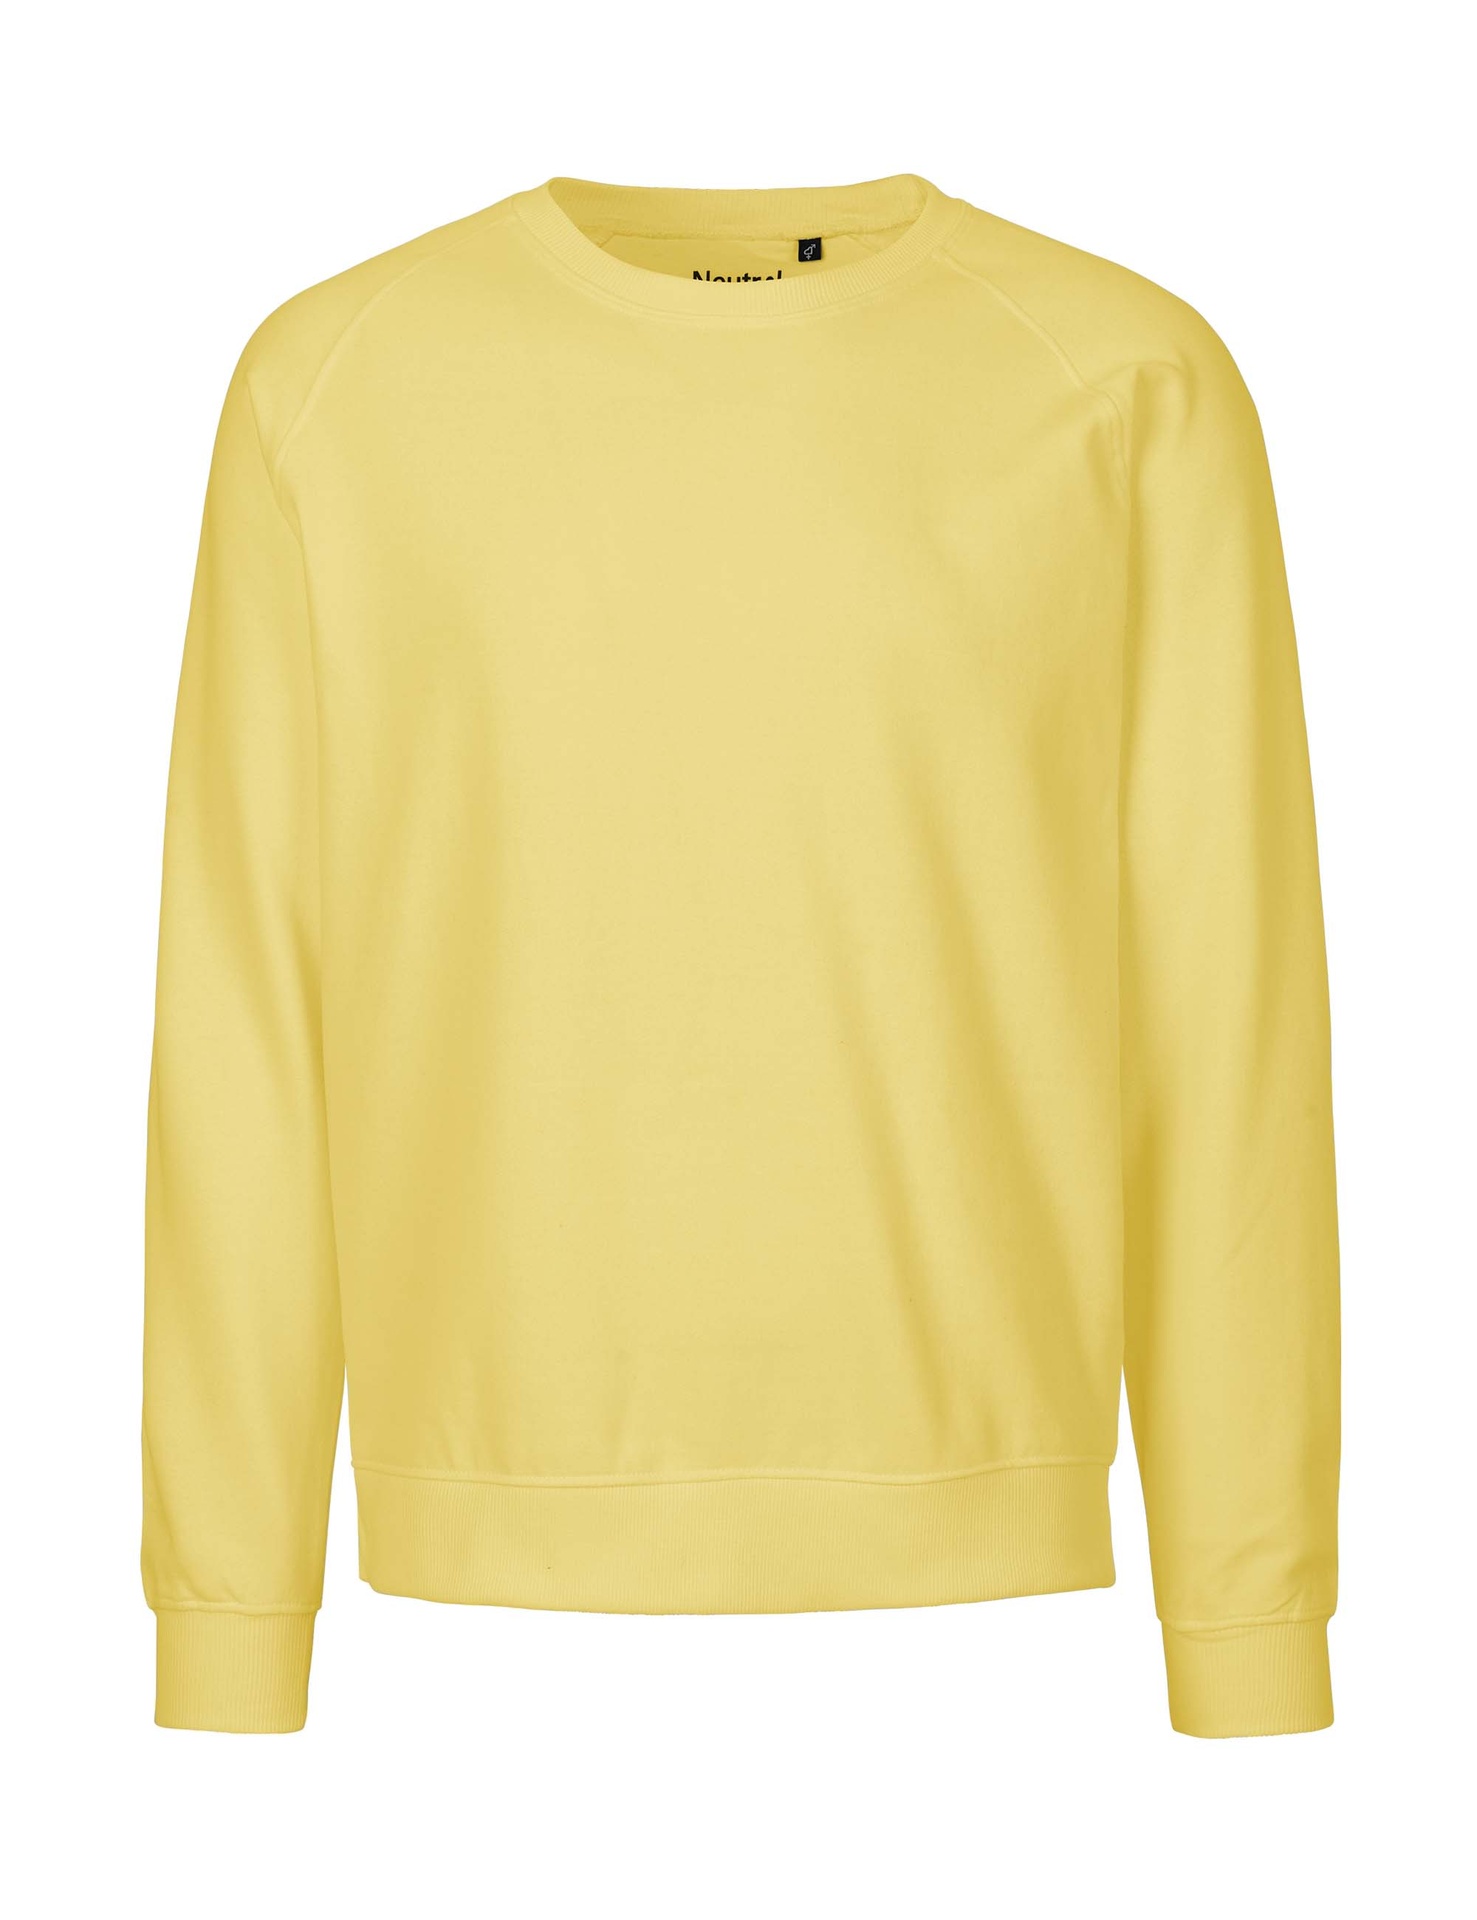 [PR/02851] Unisex Sweatshirt (Dusty Yellow 43, S)